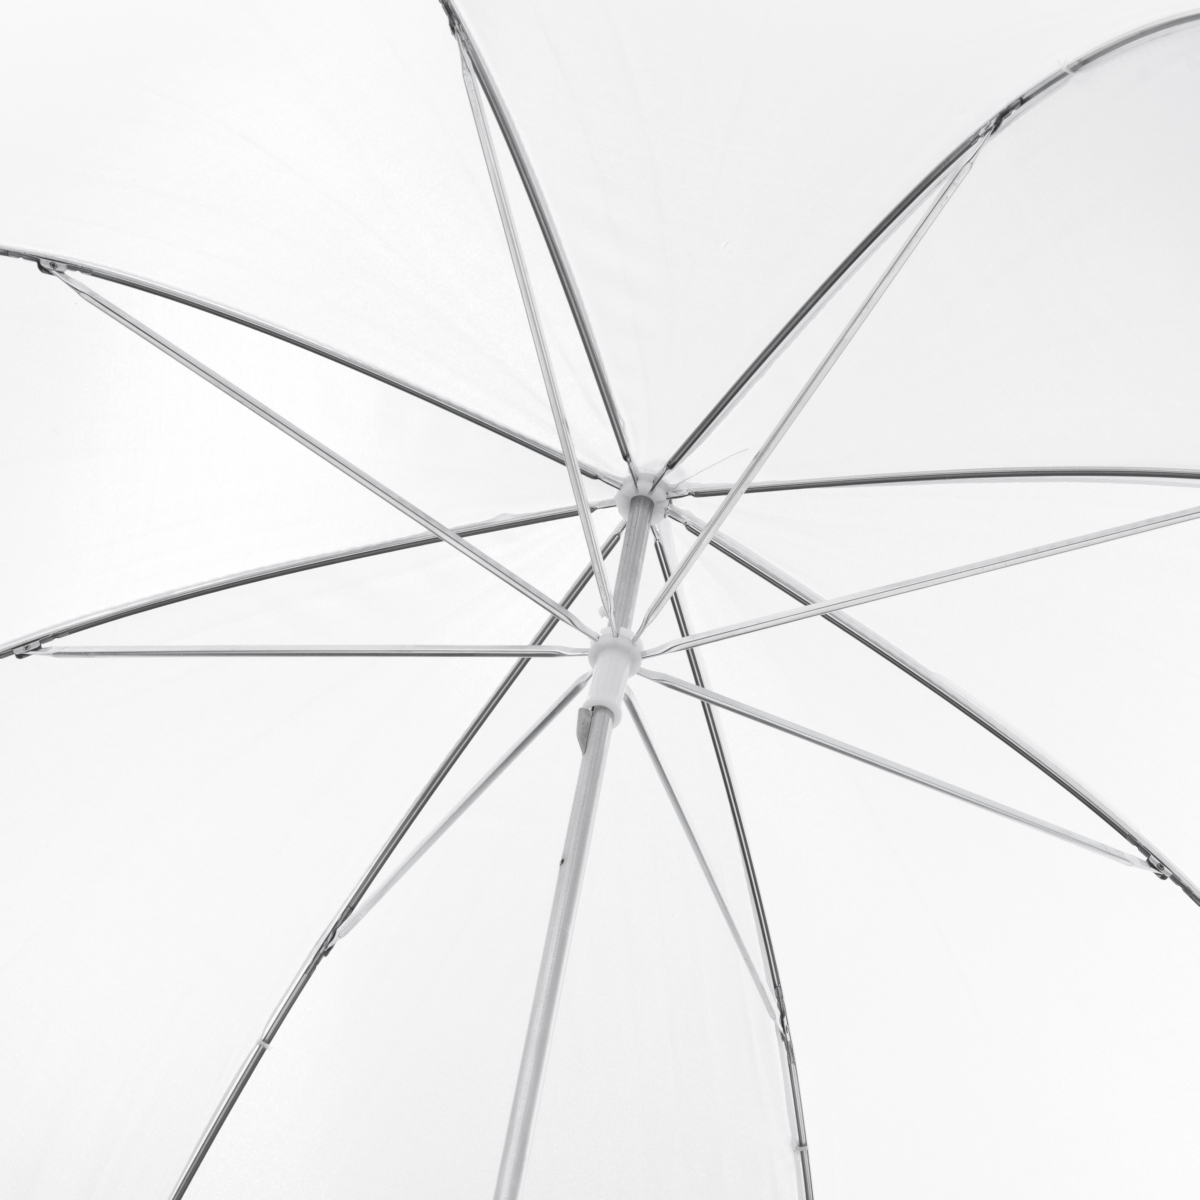 Walimex Translucent Light Umbrella white, 84cm